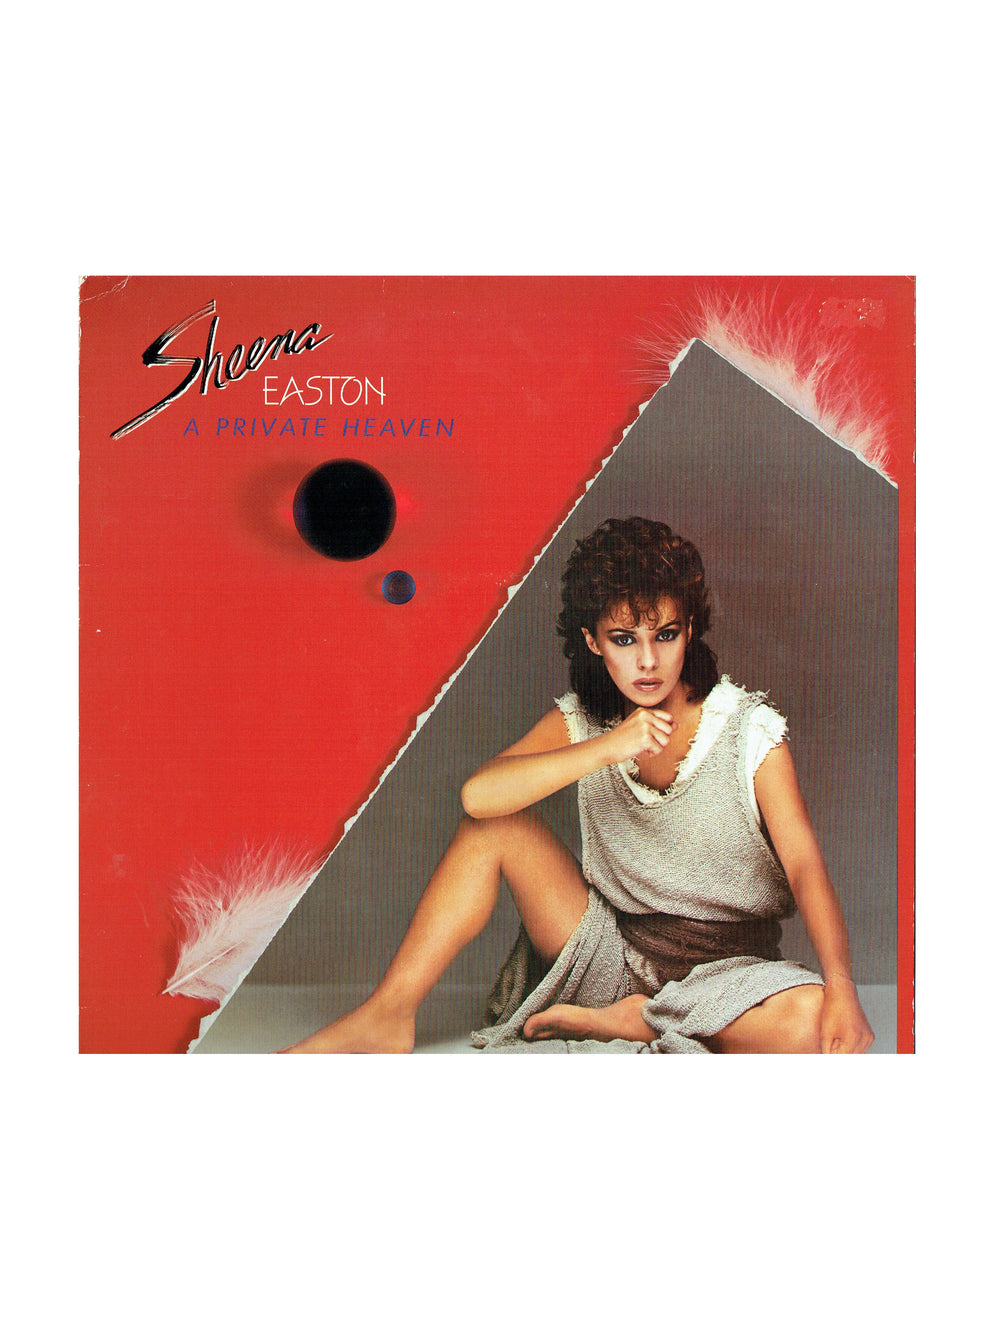 Sheena Easton A Private Heaven 12 Inch Vinyl Album Prince SMS